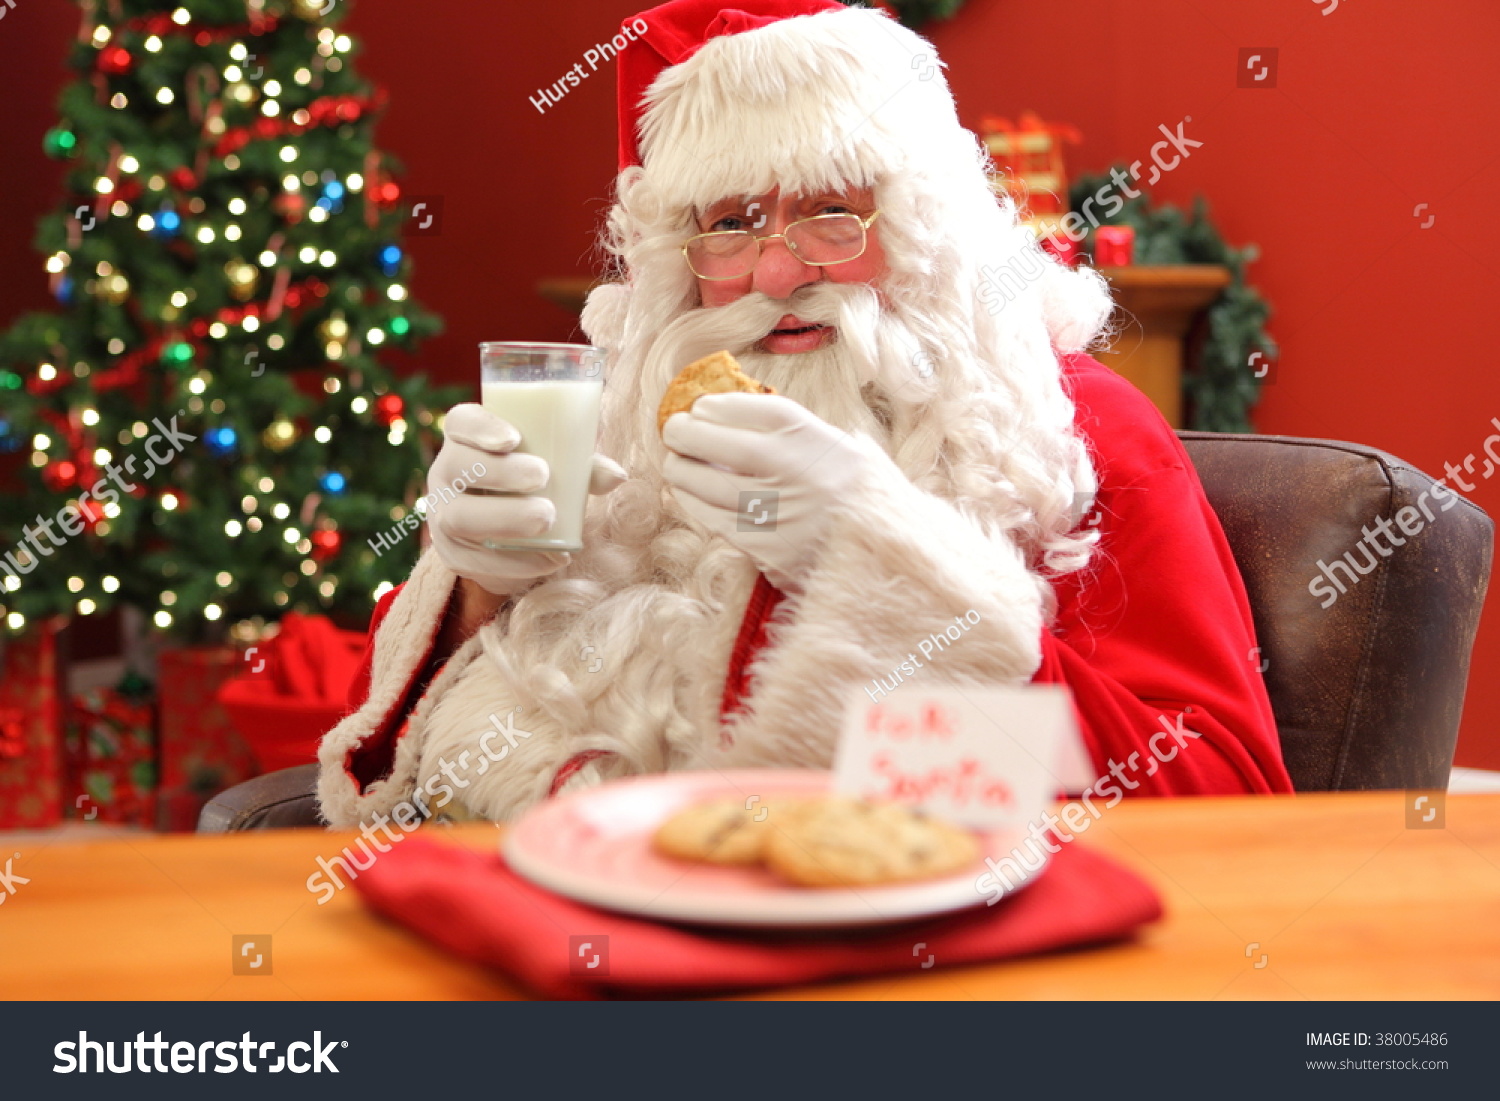 Santa Claus Eating Cookies Glass Milk Stock Photo 38005486 